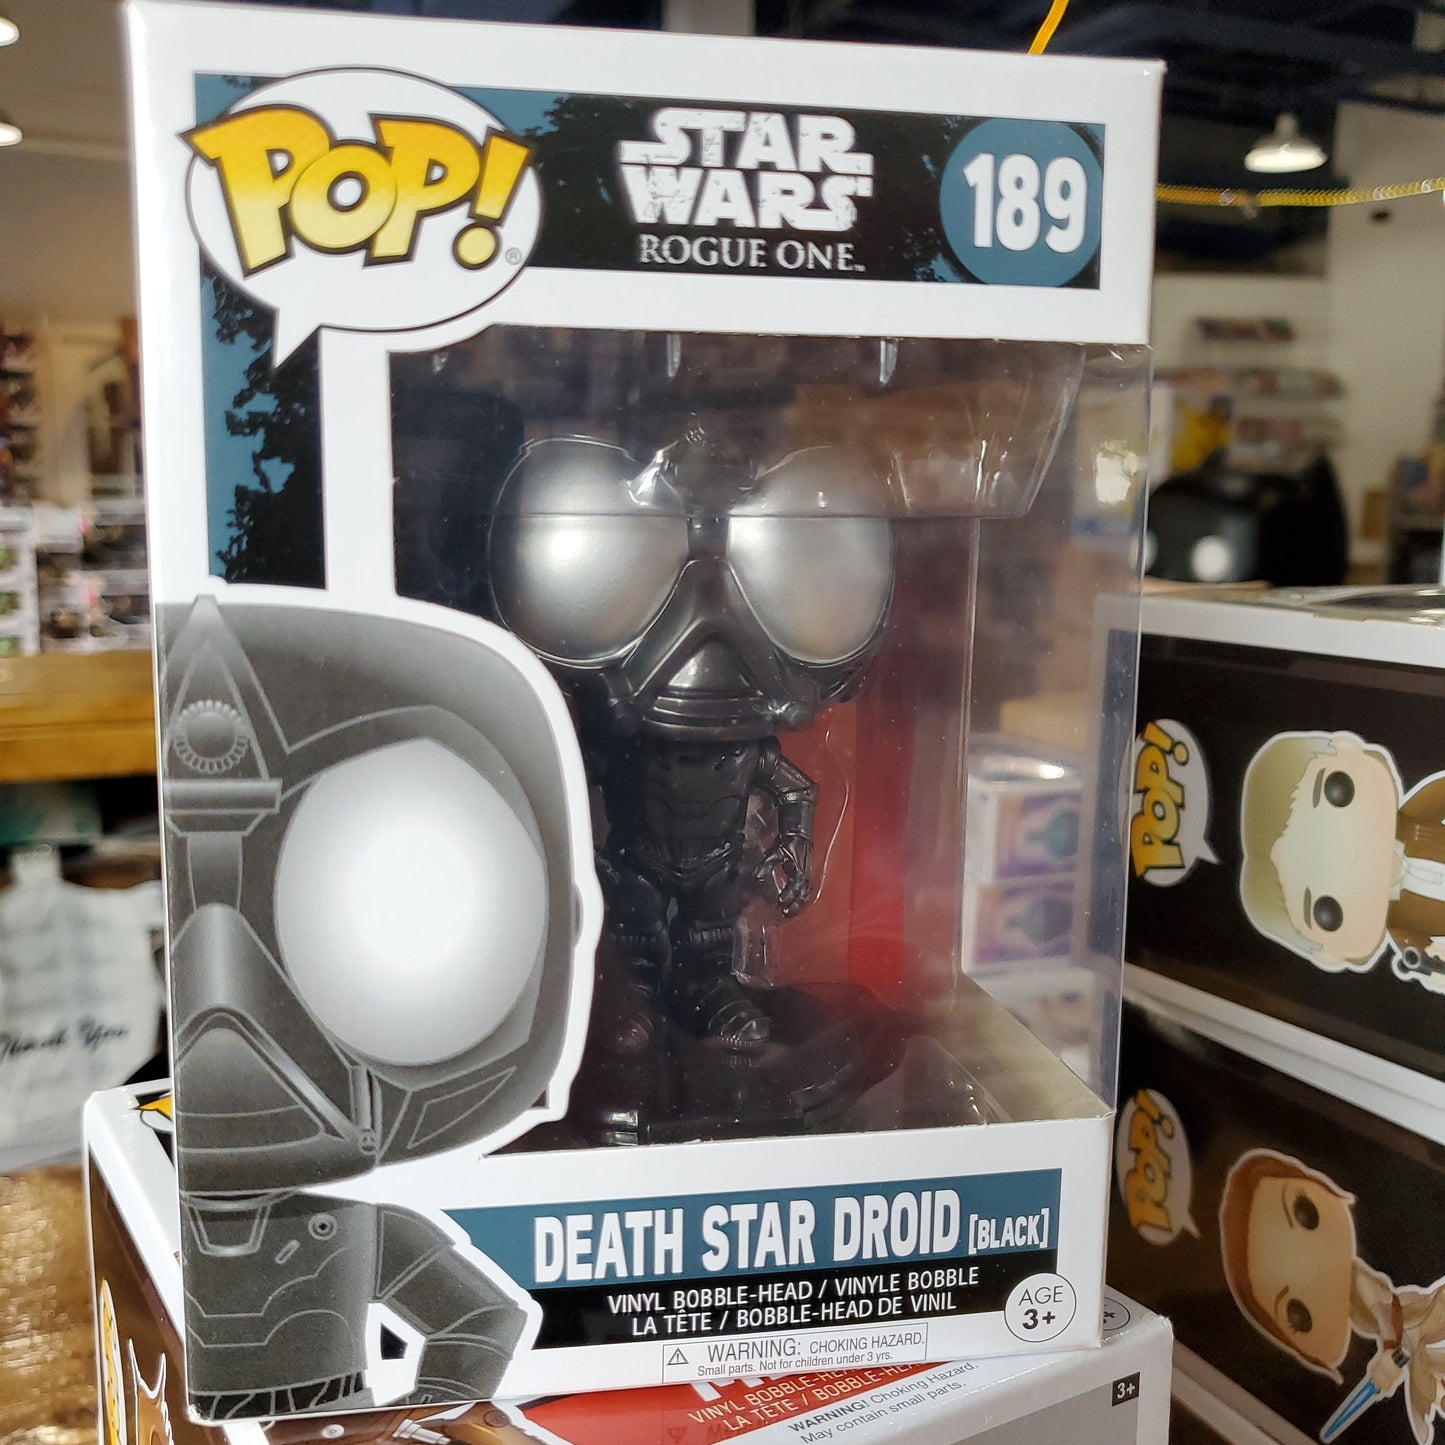 Star Wars Rogue One Death Star Droid Funko Pop! vinyl figure